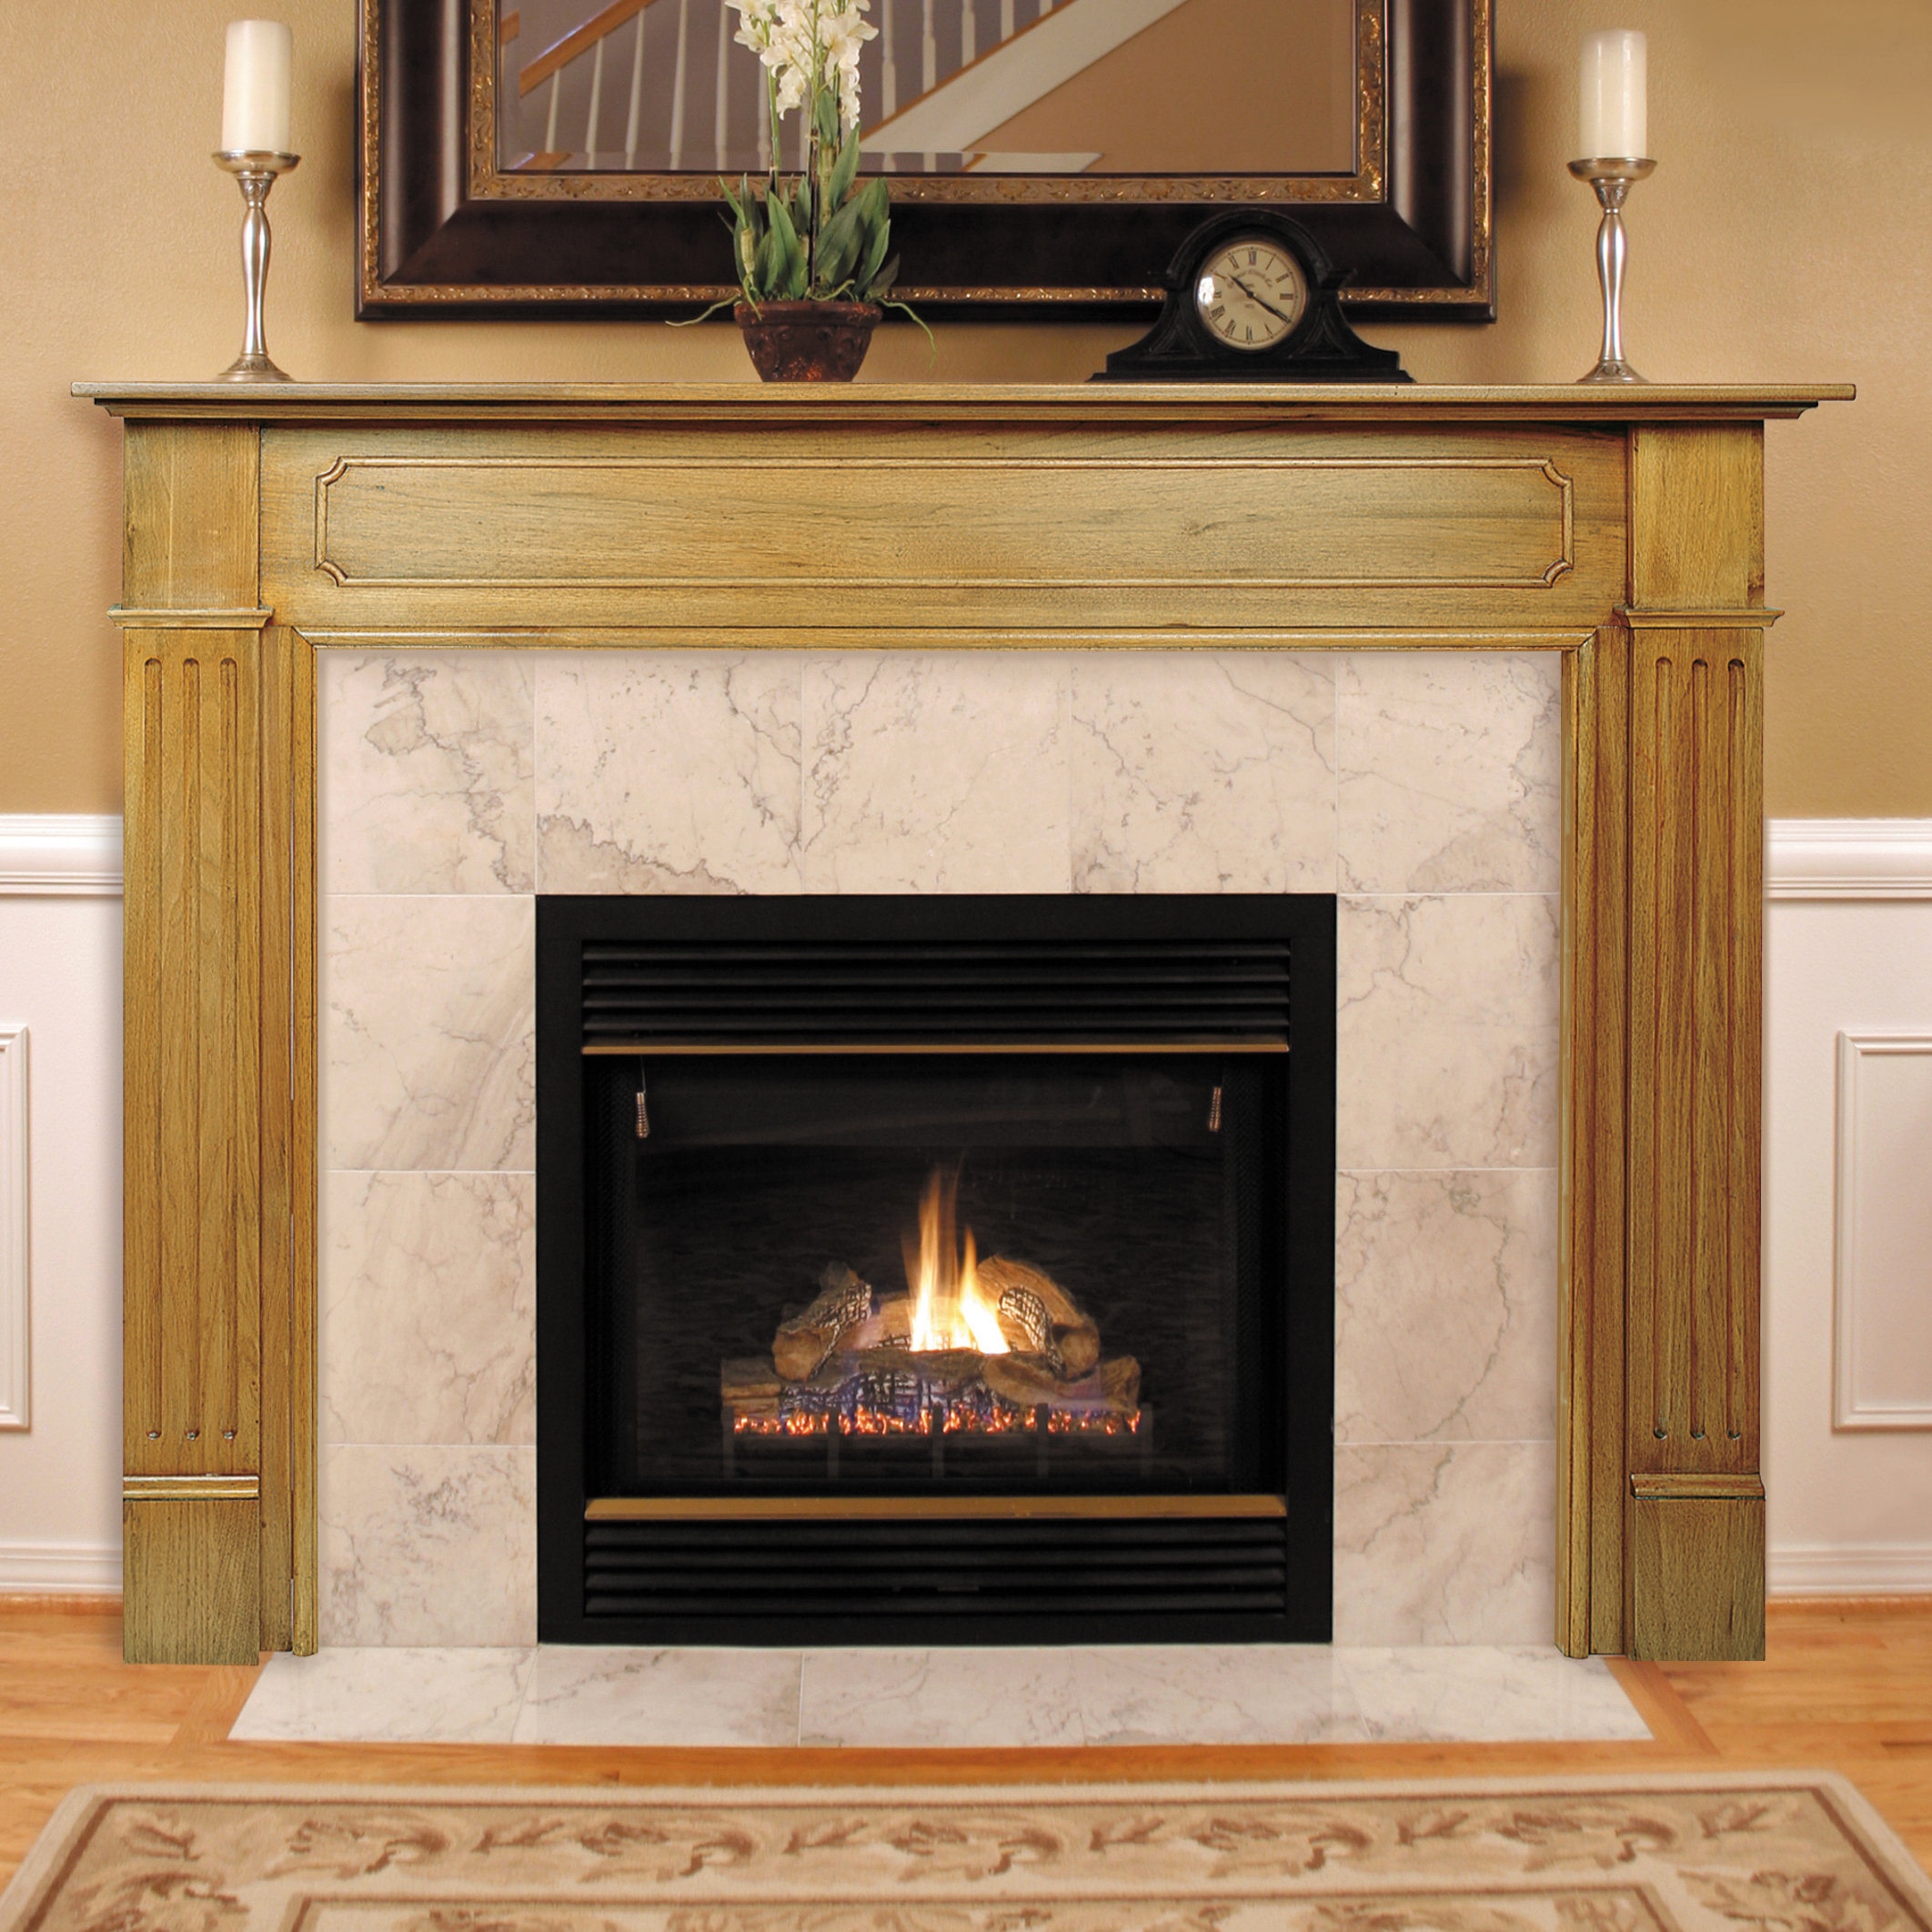 Fireplace Mantels You'll Love | Wayfair - The Williamsburg Fireplace Mantel Surround